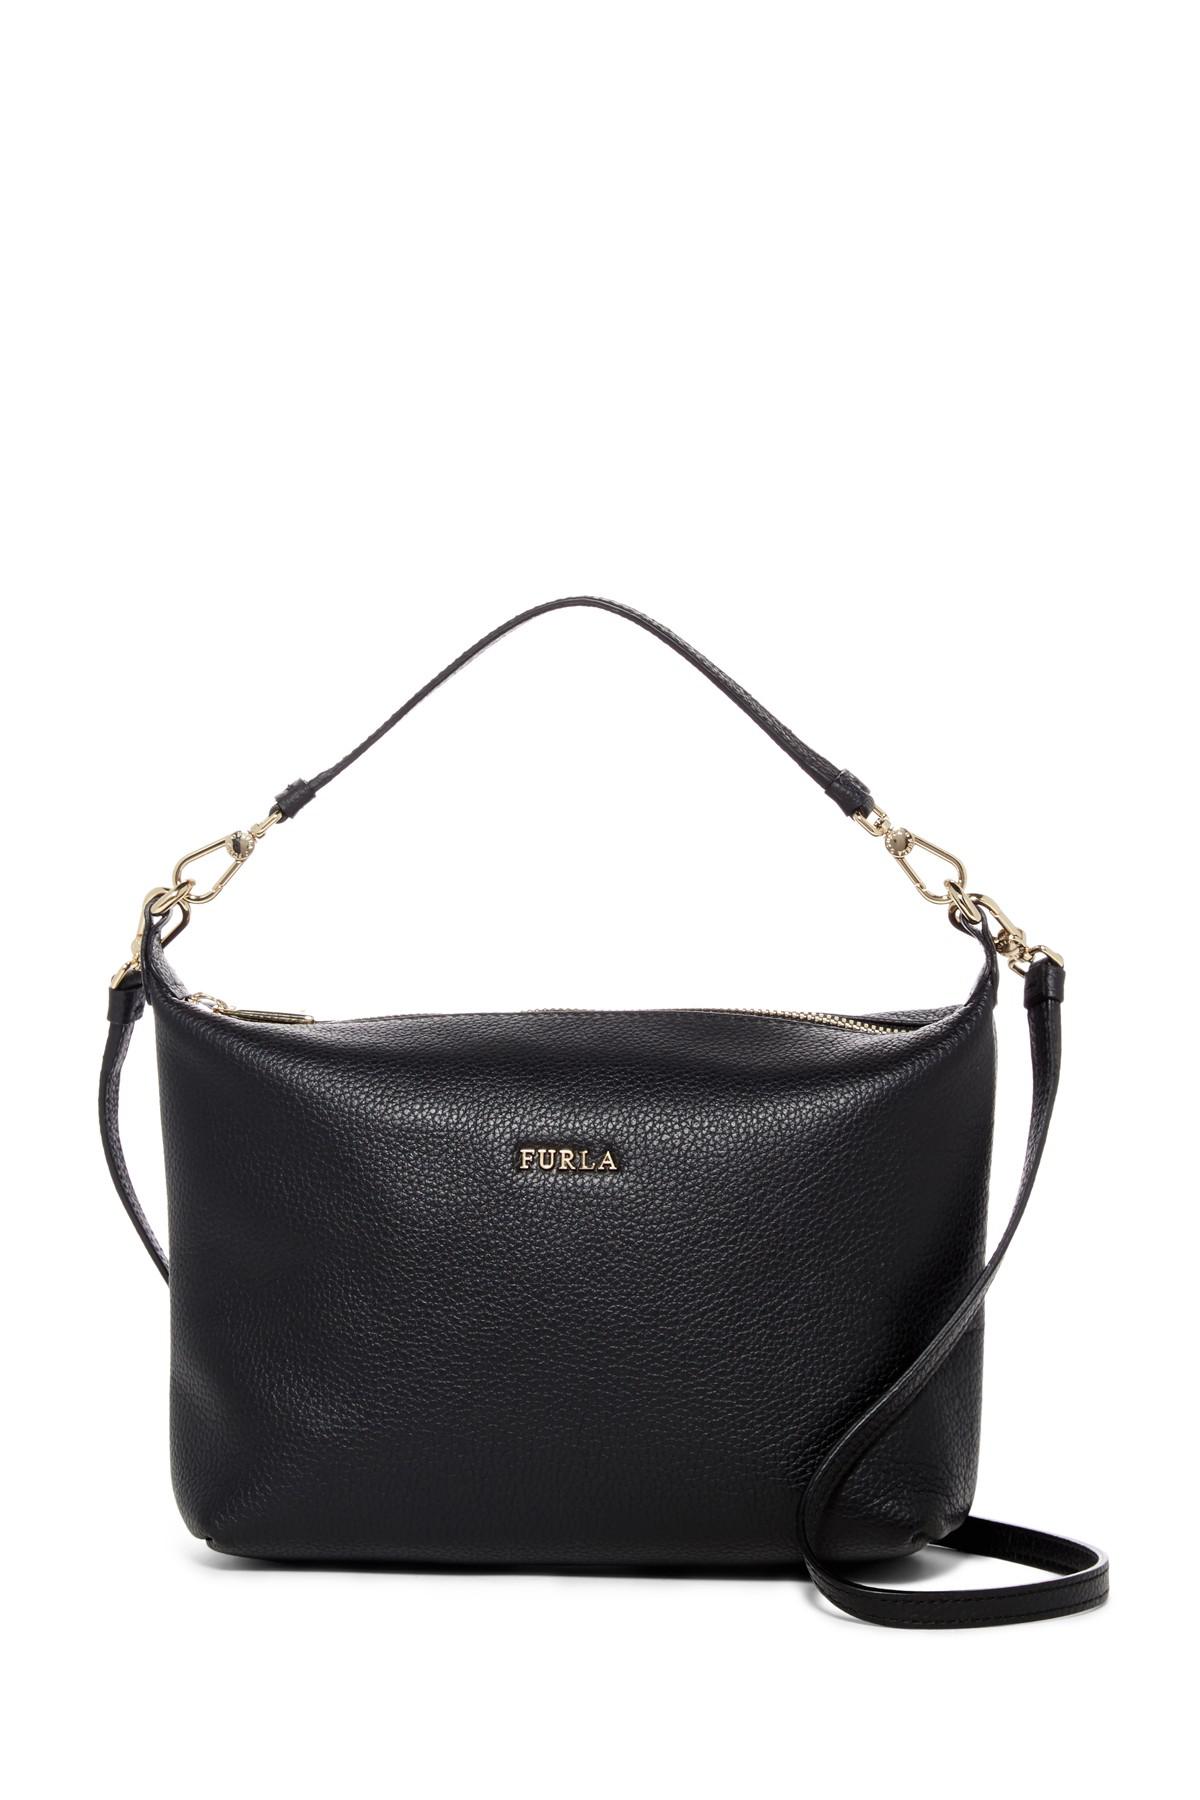 Furla Sophie Leather Crossbody Bag in Black | Lyst